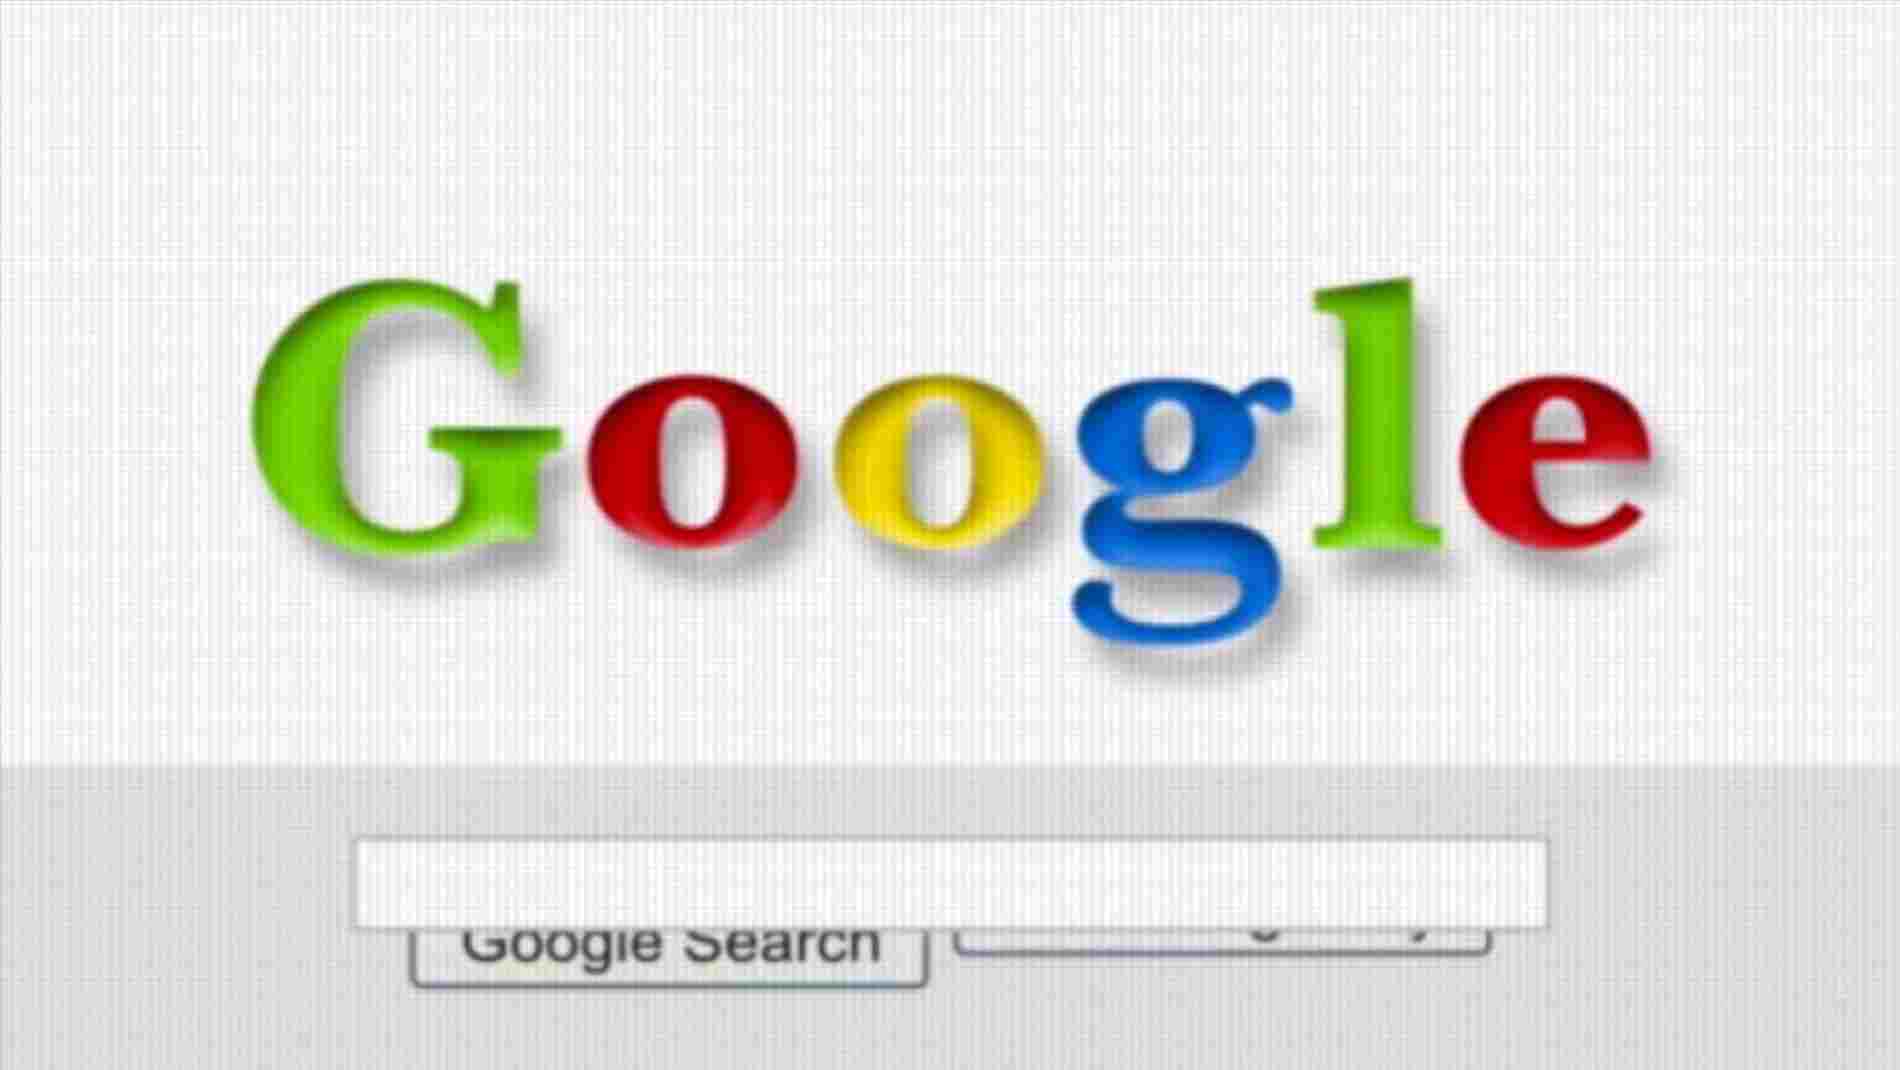 First Google Logo - first google logo ever - androidappsfun.com - androidappsfun.com